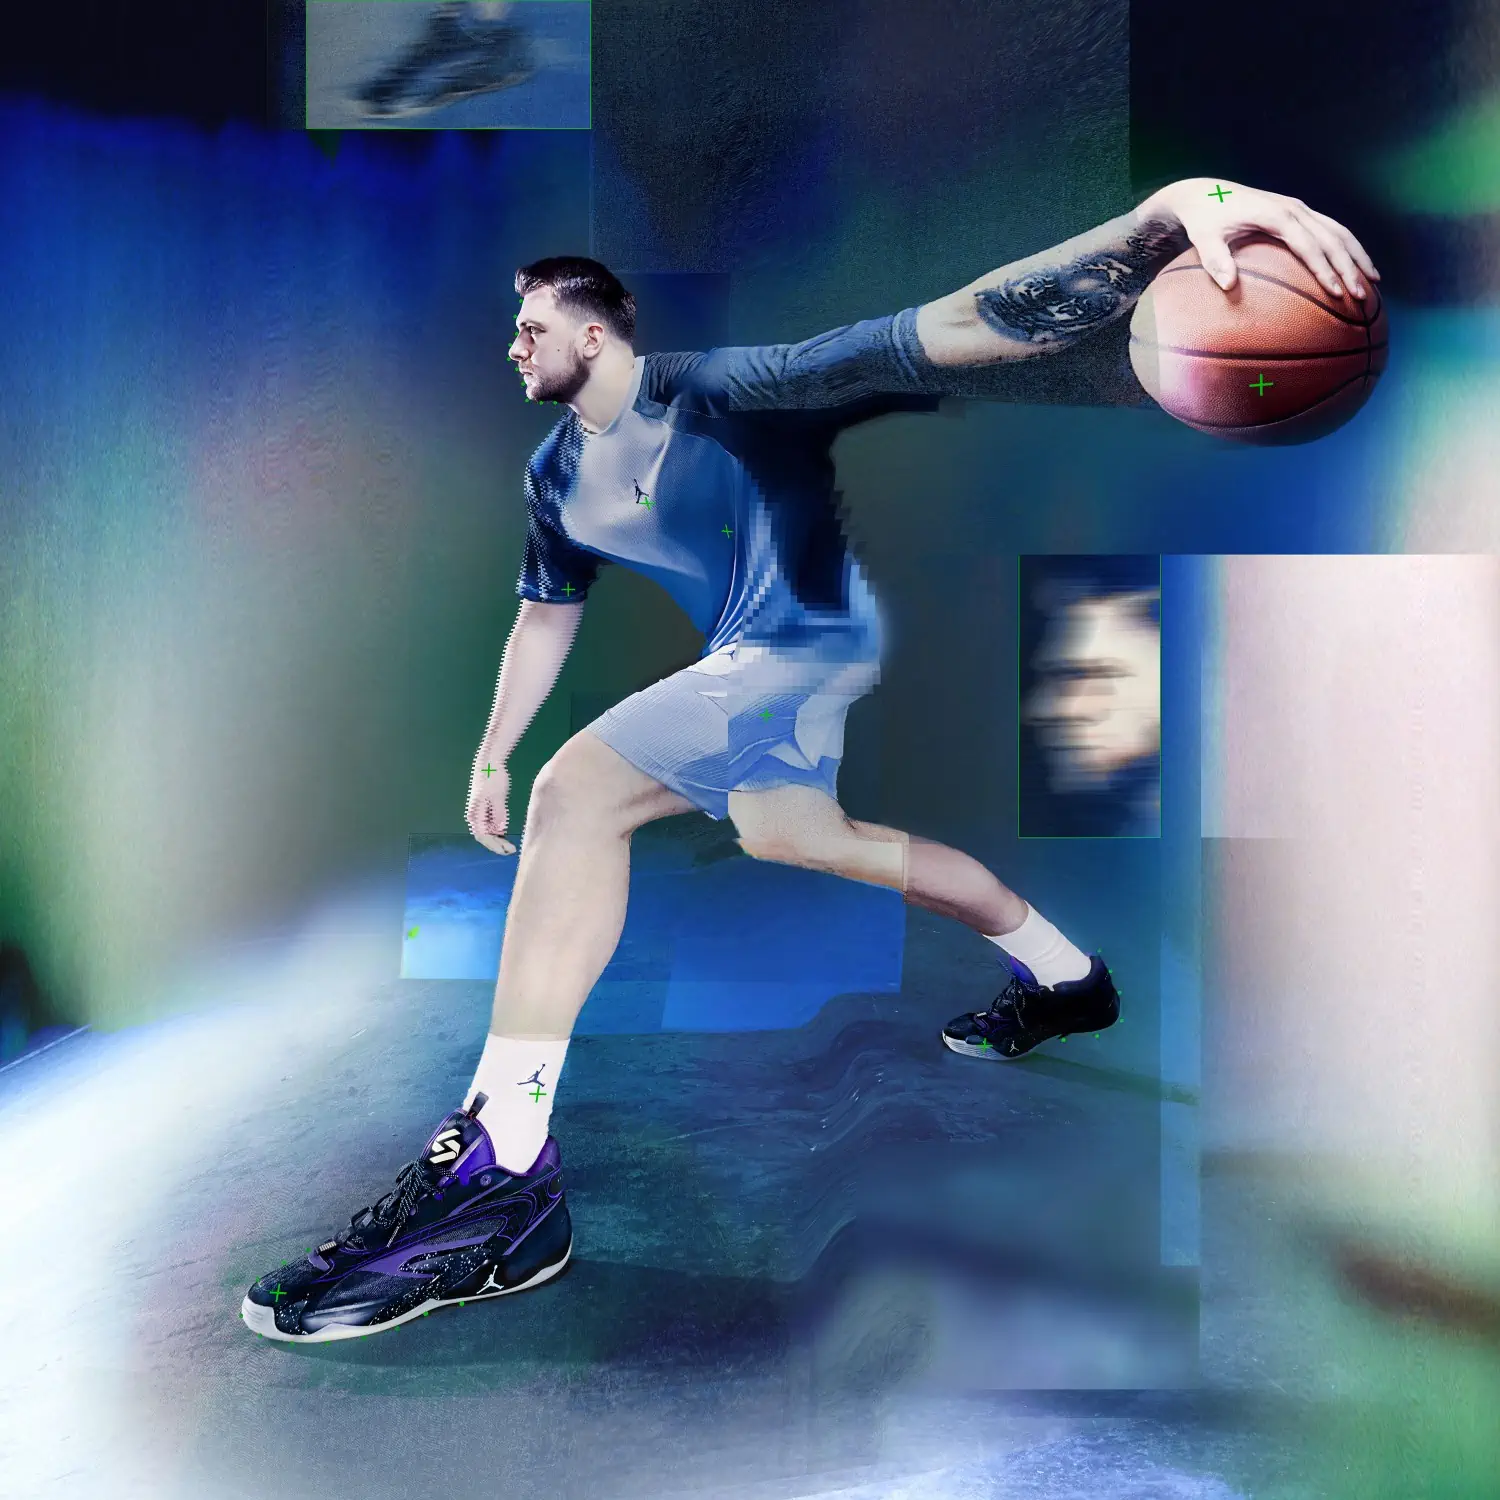 The creation and innovation of the Nike Jordan Luka 2